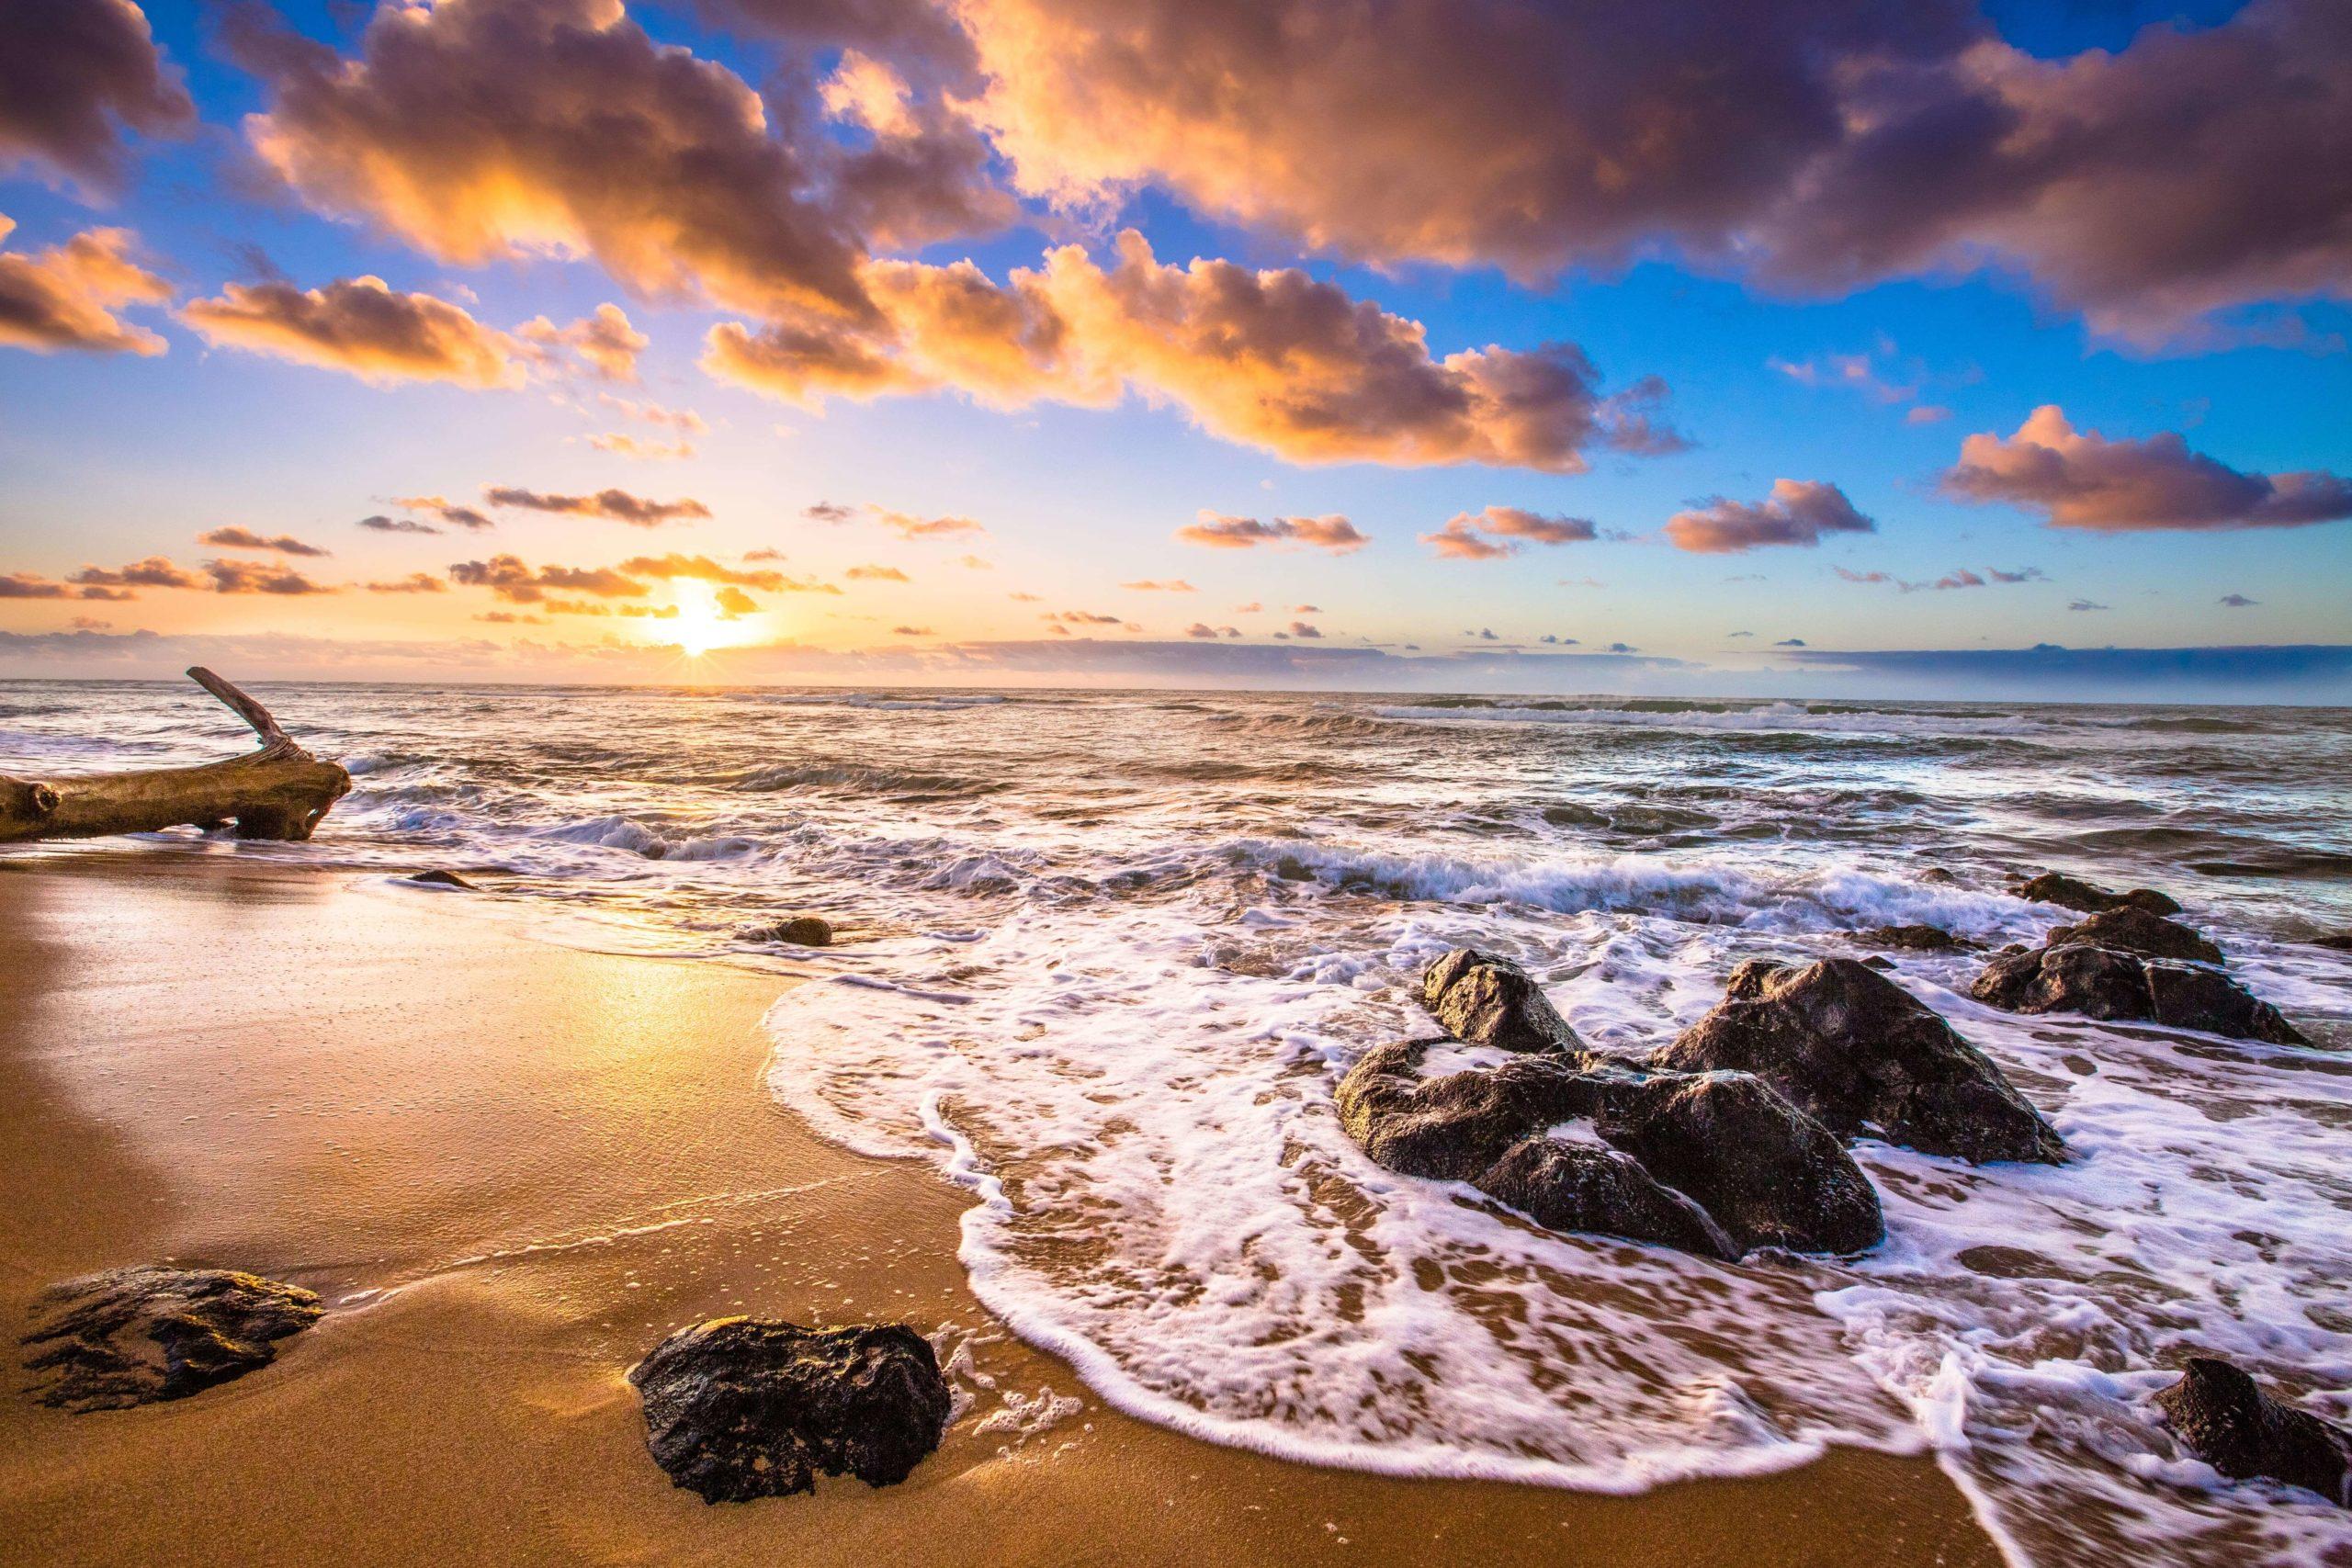 A beautiful sunrise on a beach in Kauai